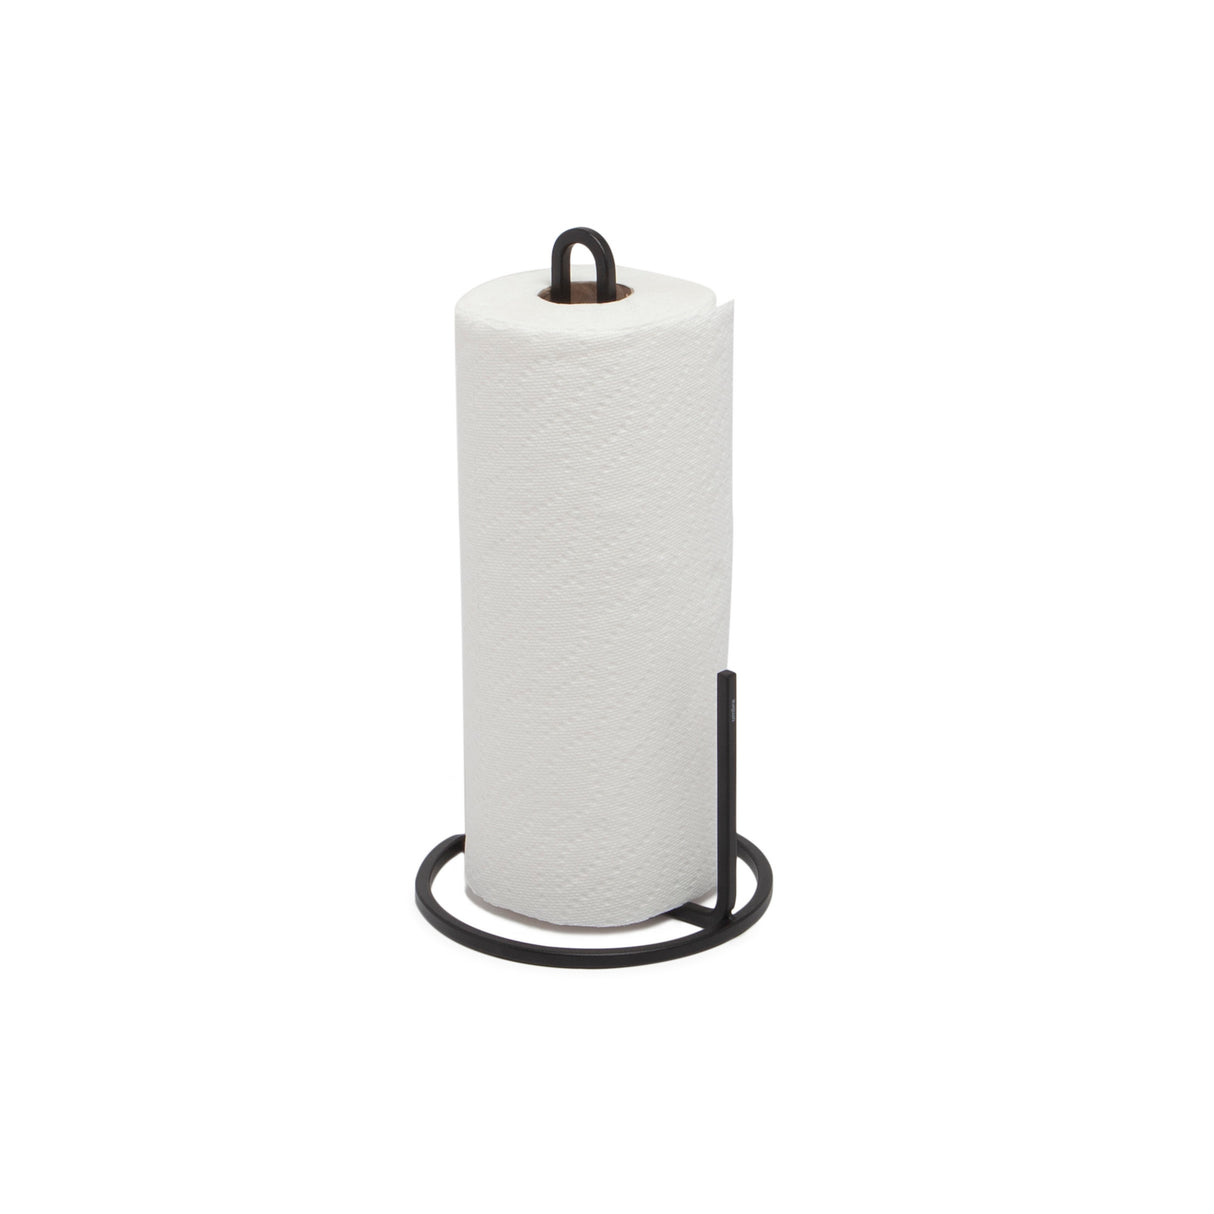 Umbra Black Stainless Steel Tug Paper Towel Holder